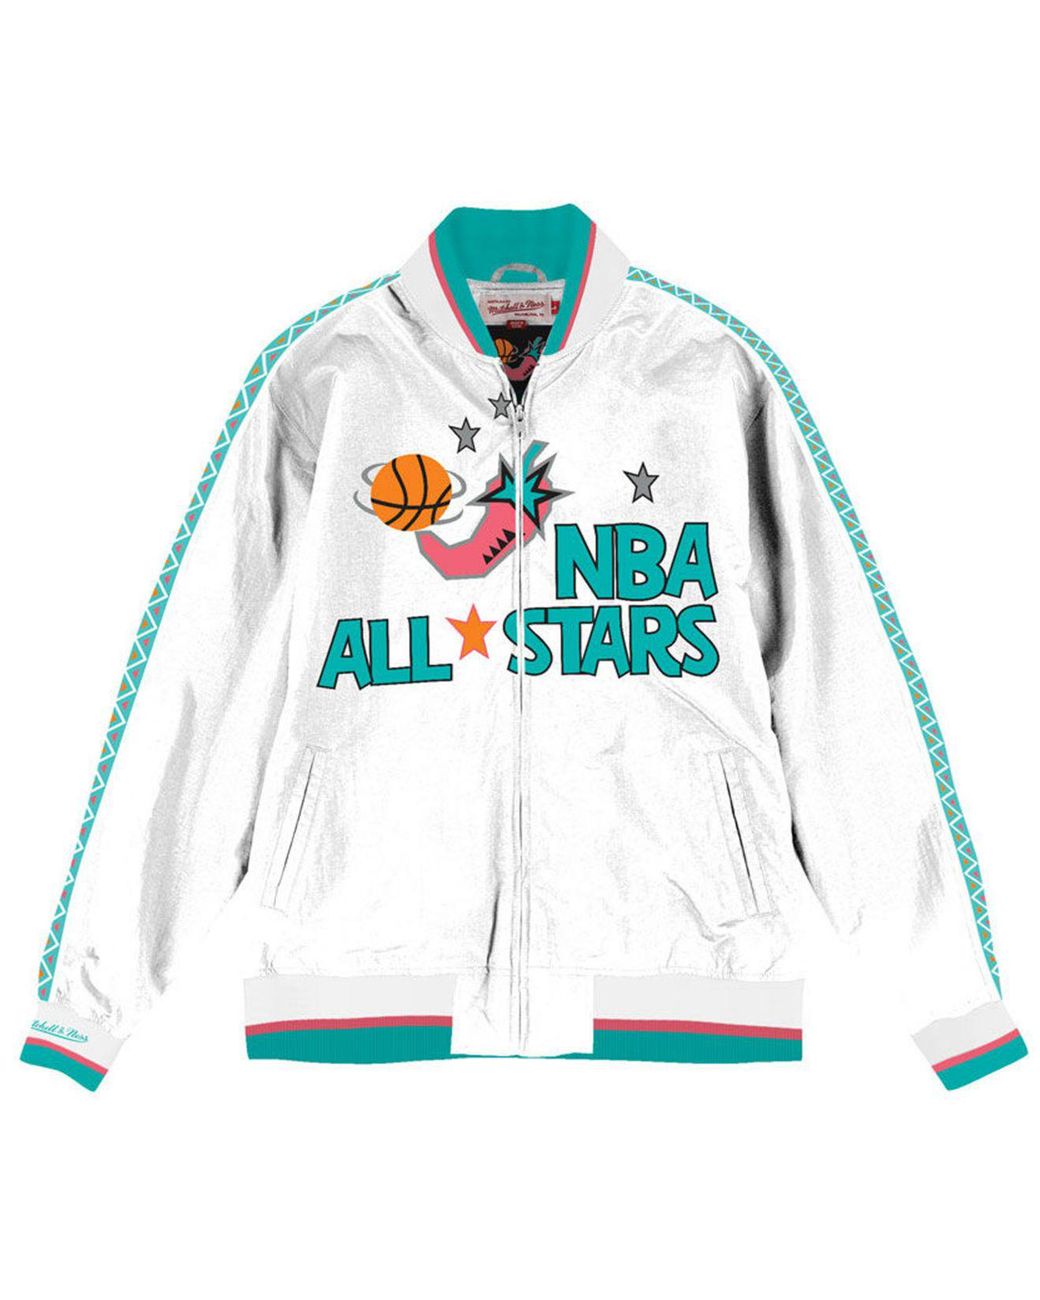 1996 NBA All-Star Satin Jacket